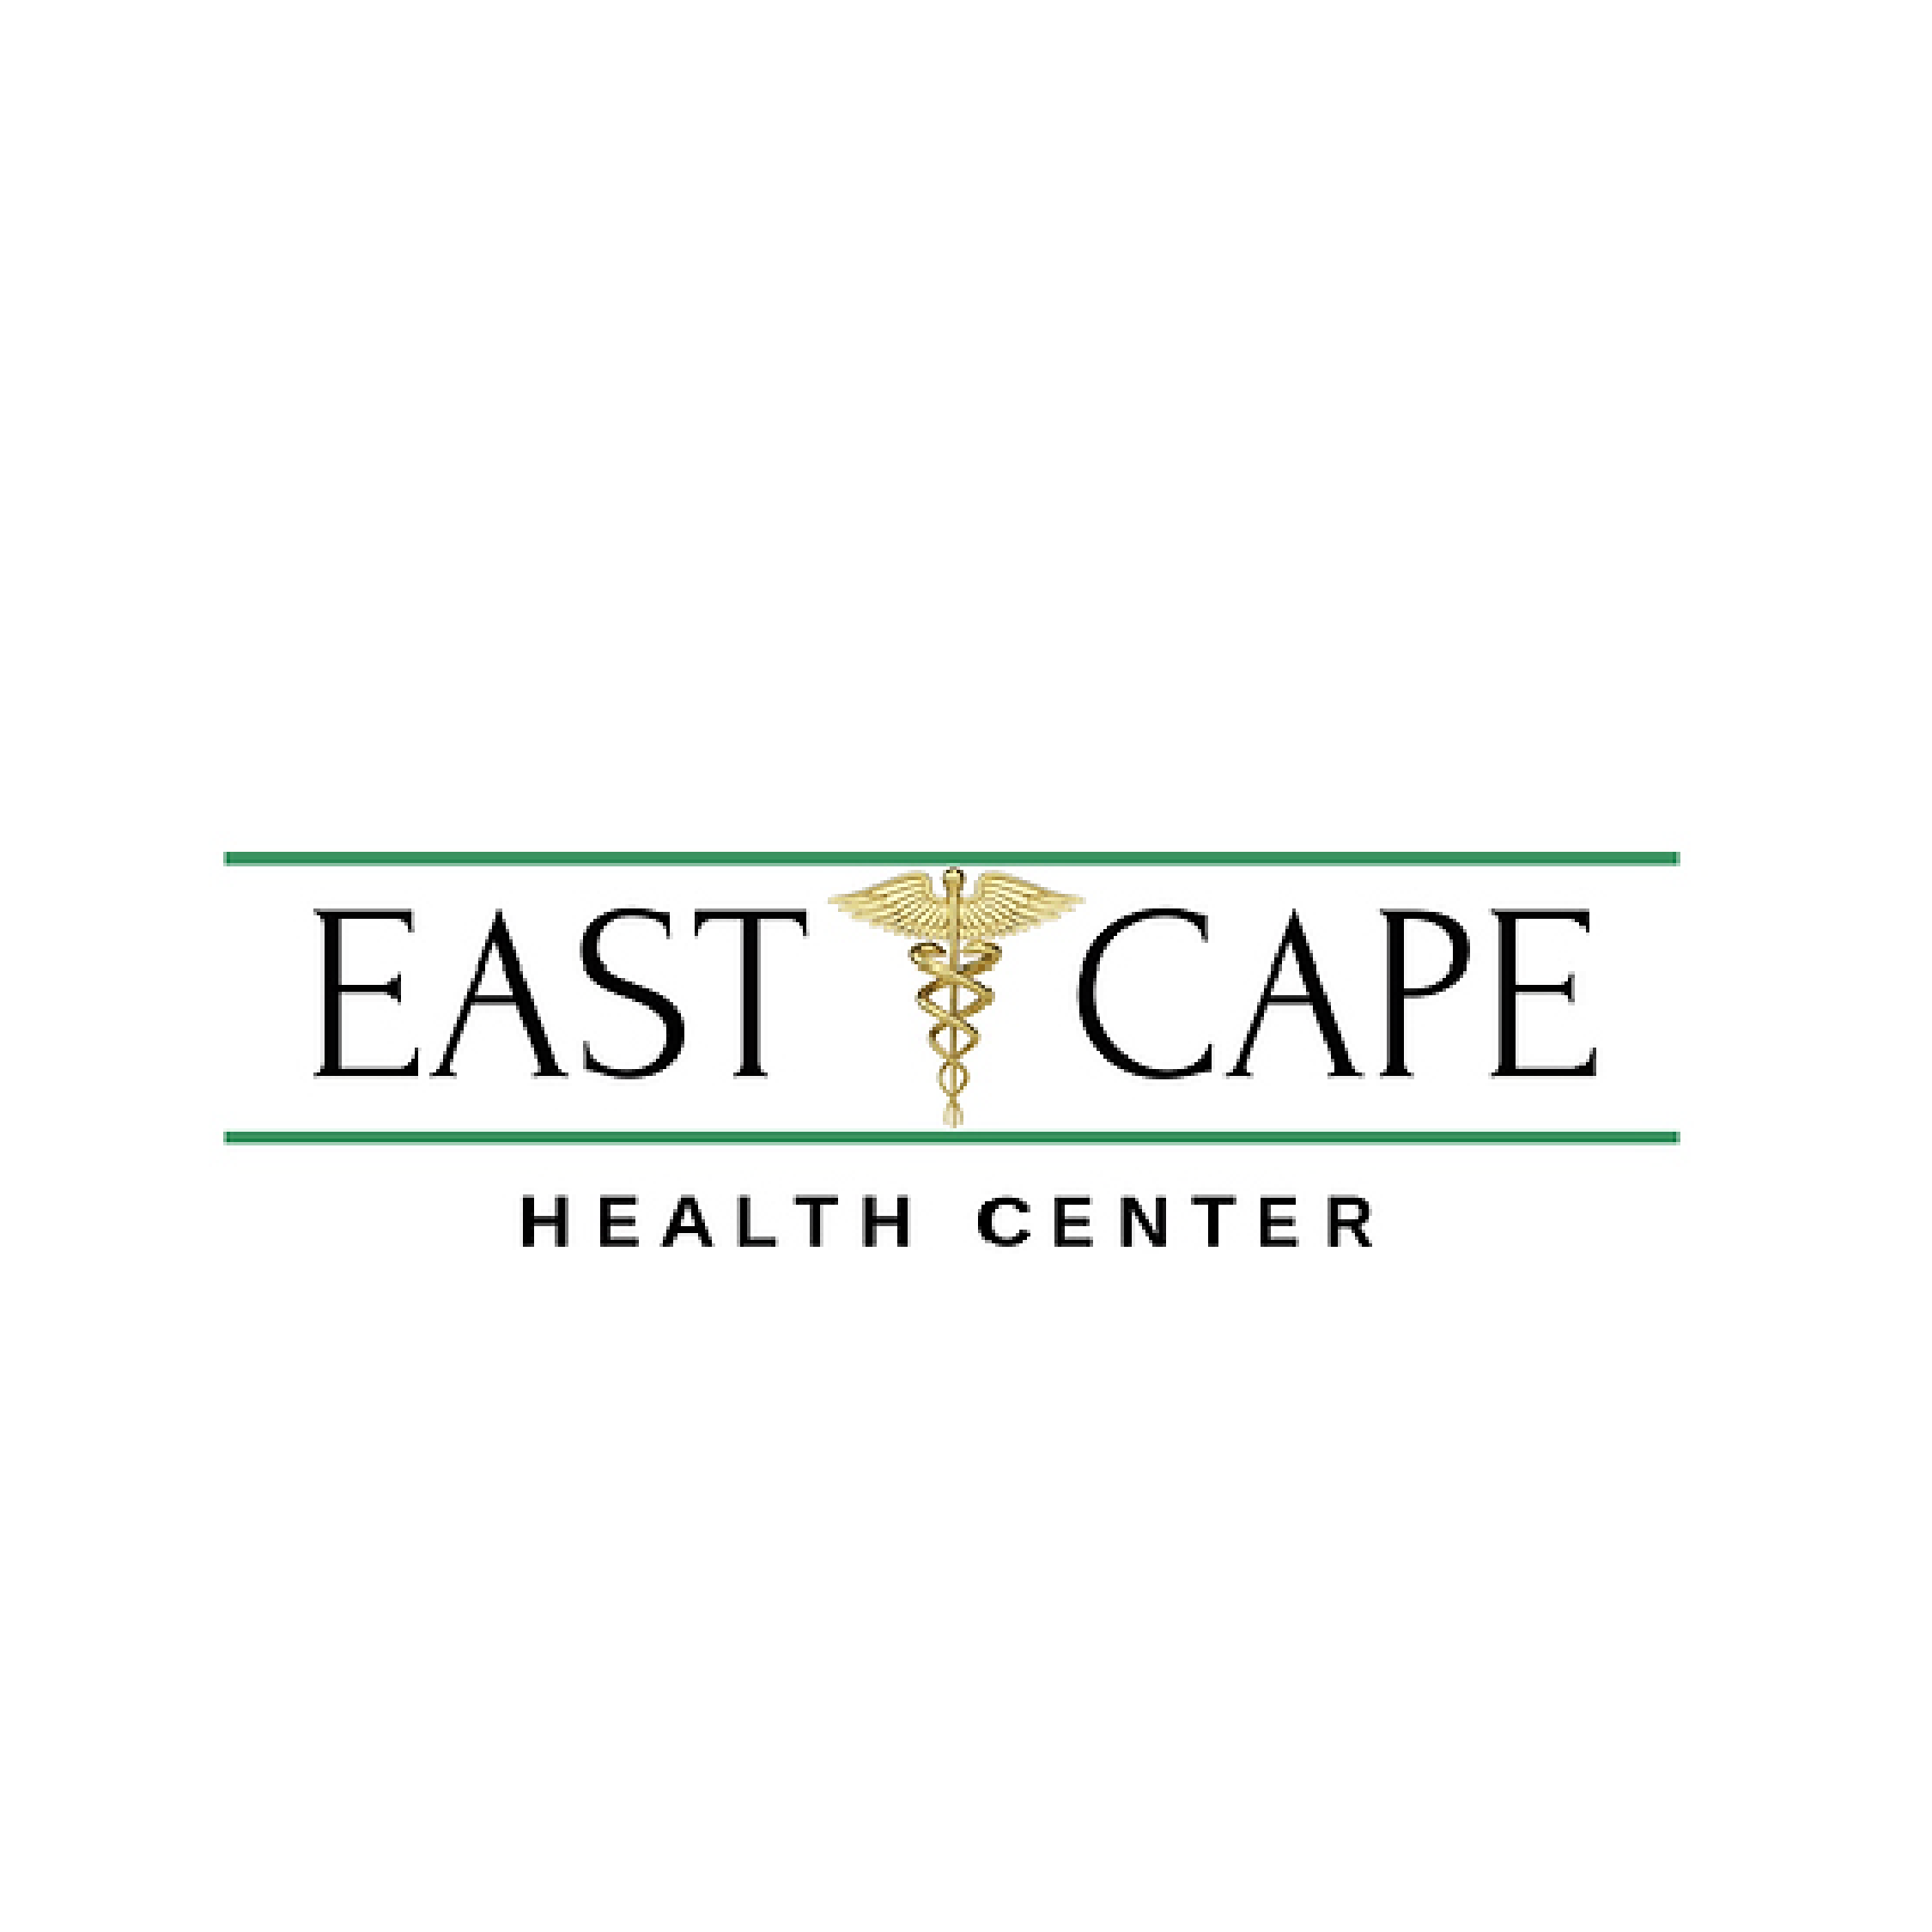 EAST CAPE HEALTH CENTER